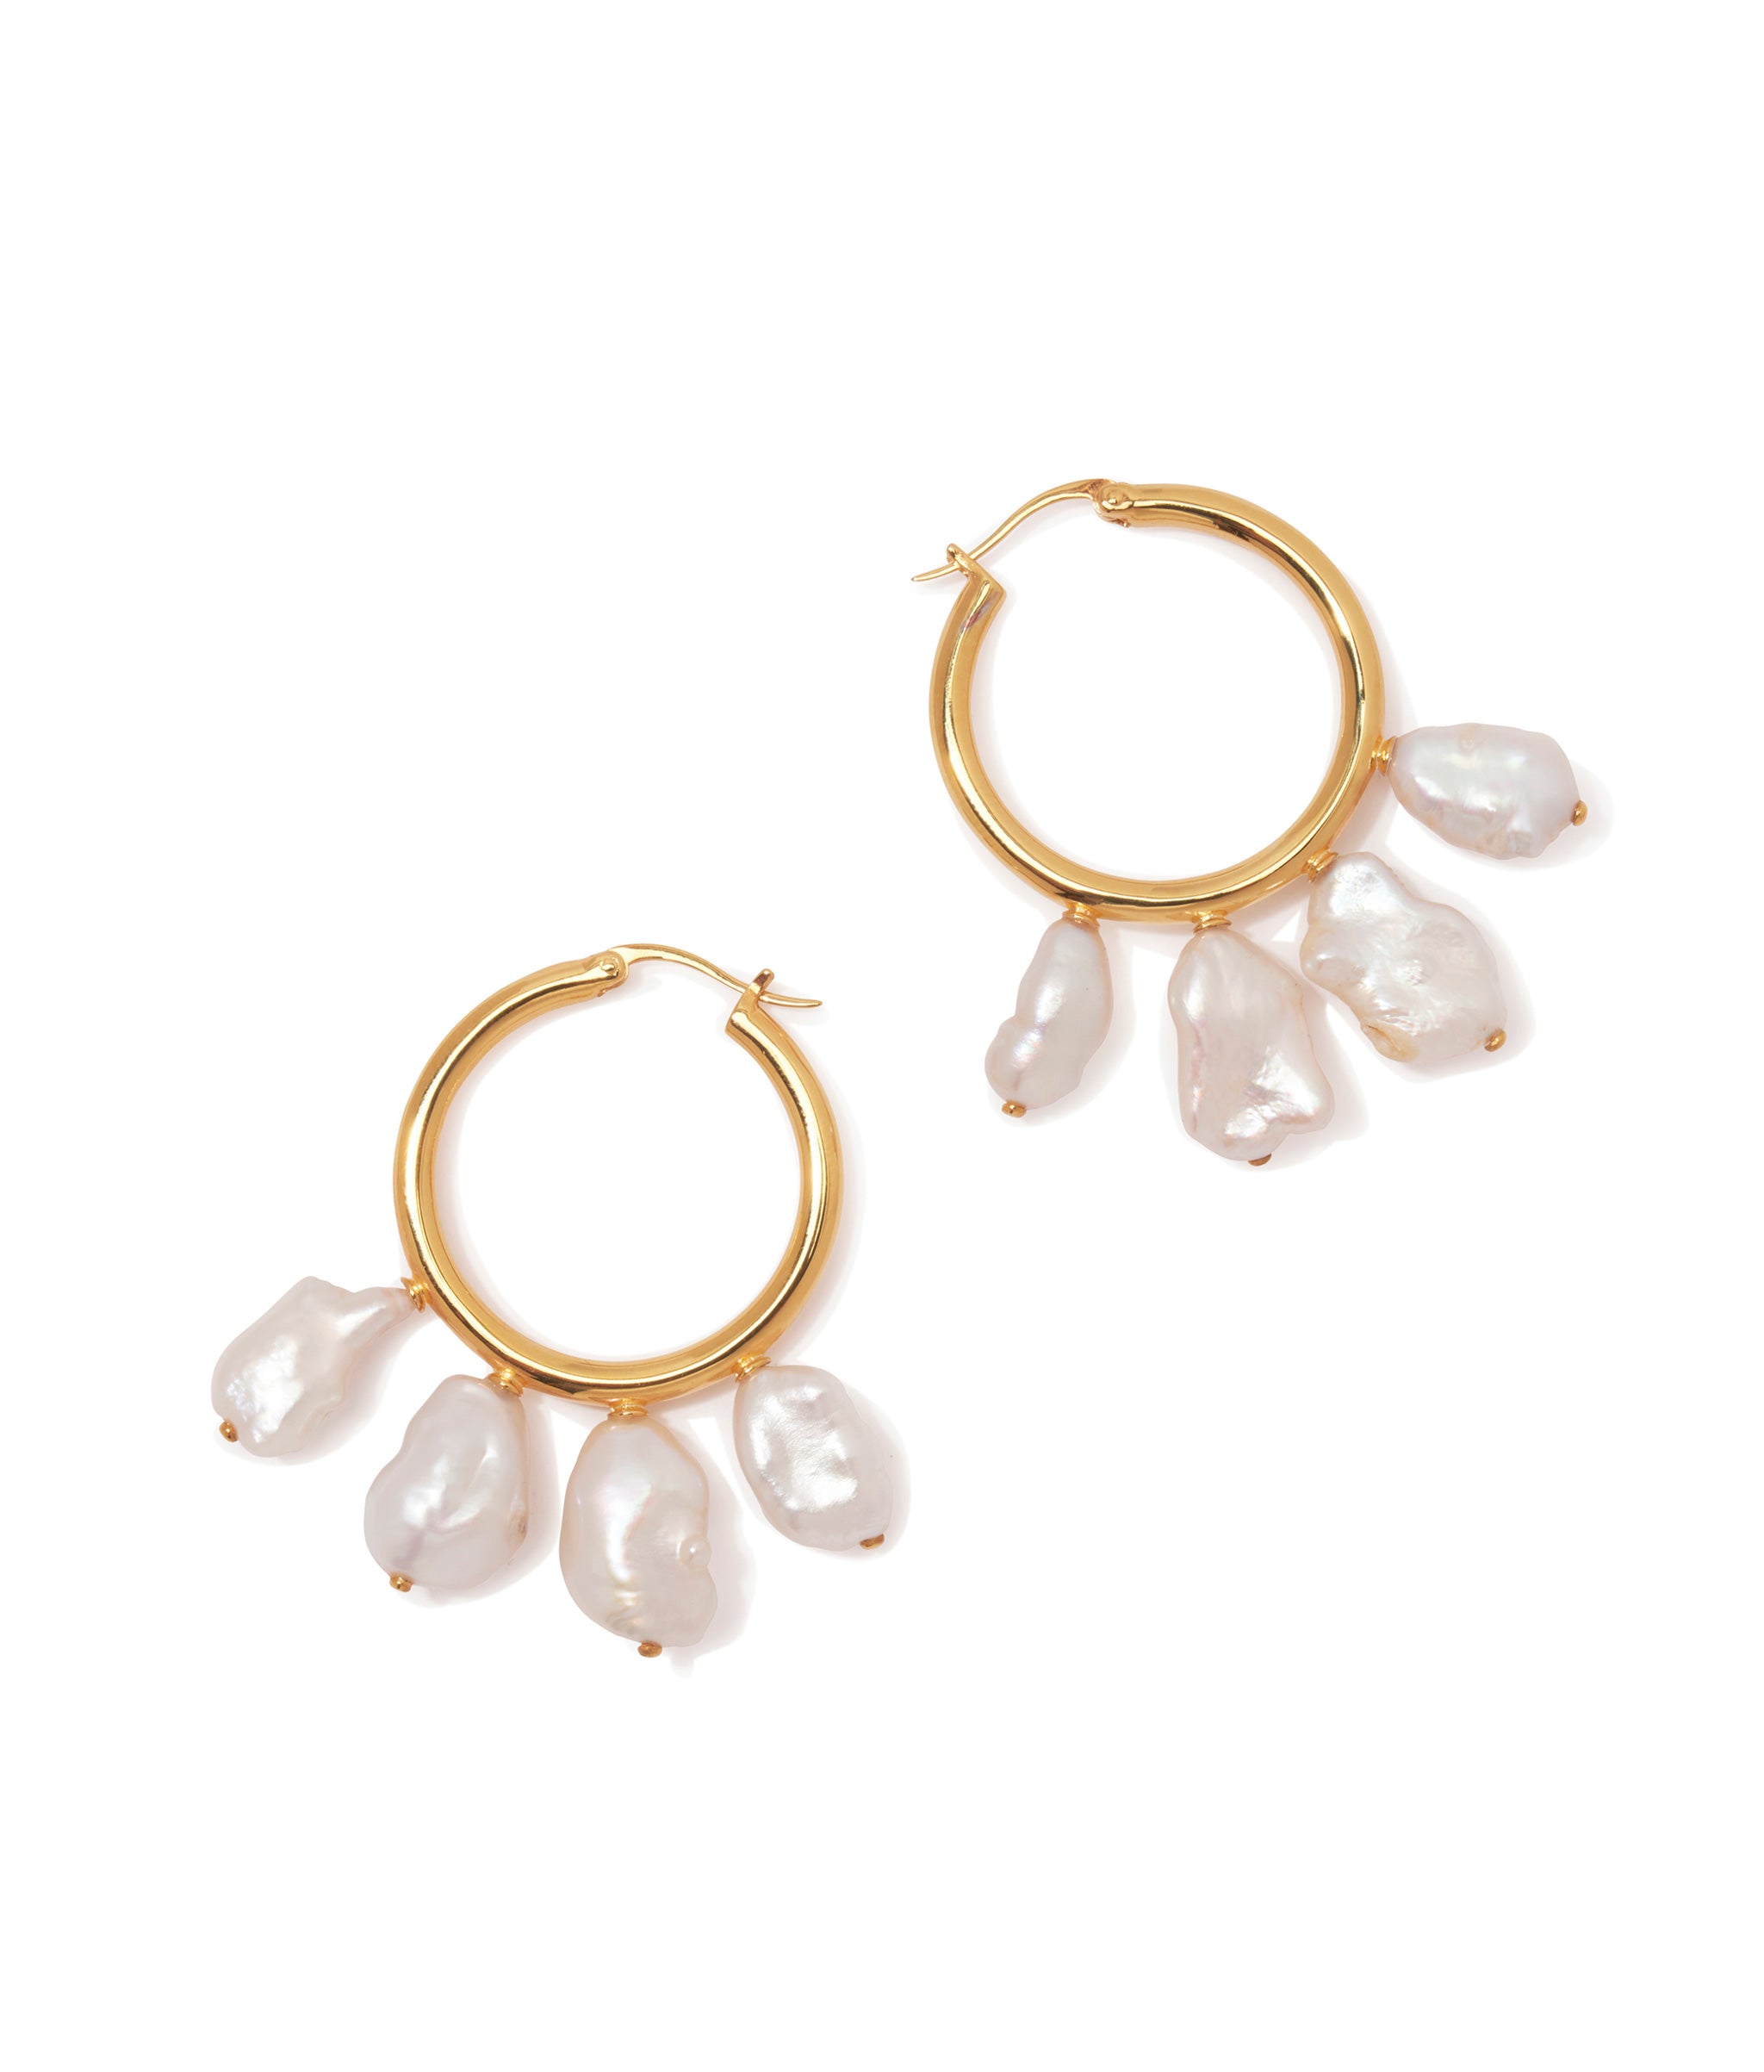 Keshi Cool Hoops. Gold-plated brass hoop earrings with four freshwater keshi drop pearls.